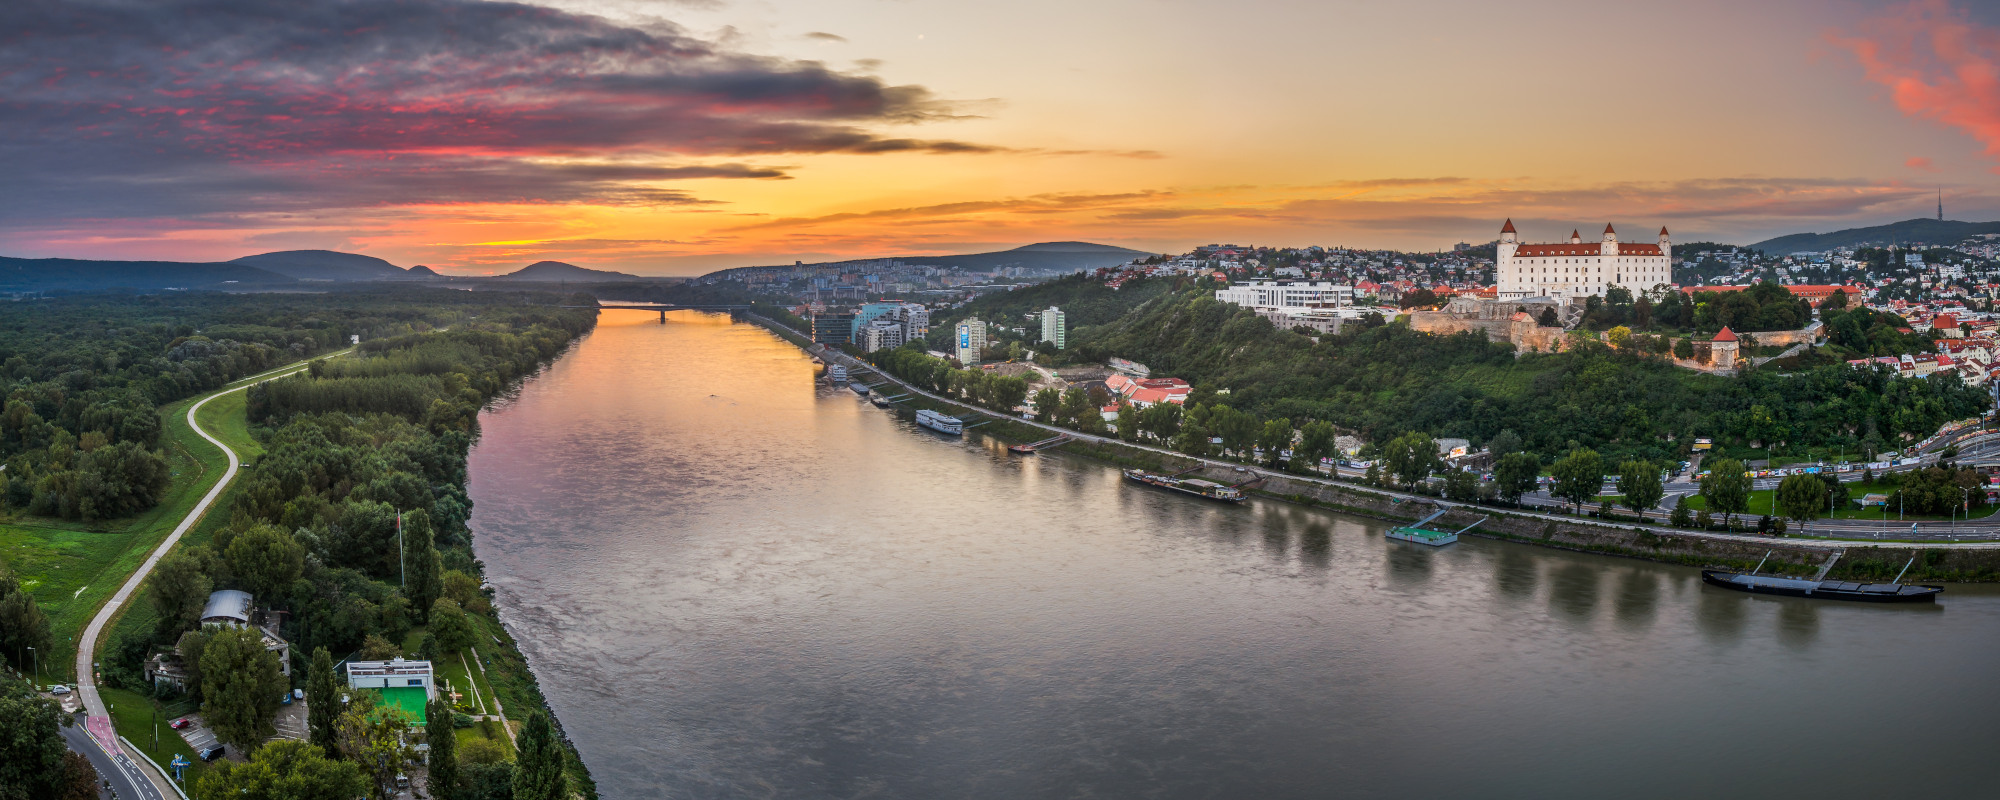 Slowakei - Donau - Bratislava - Überblick über Stadt